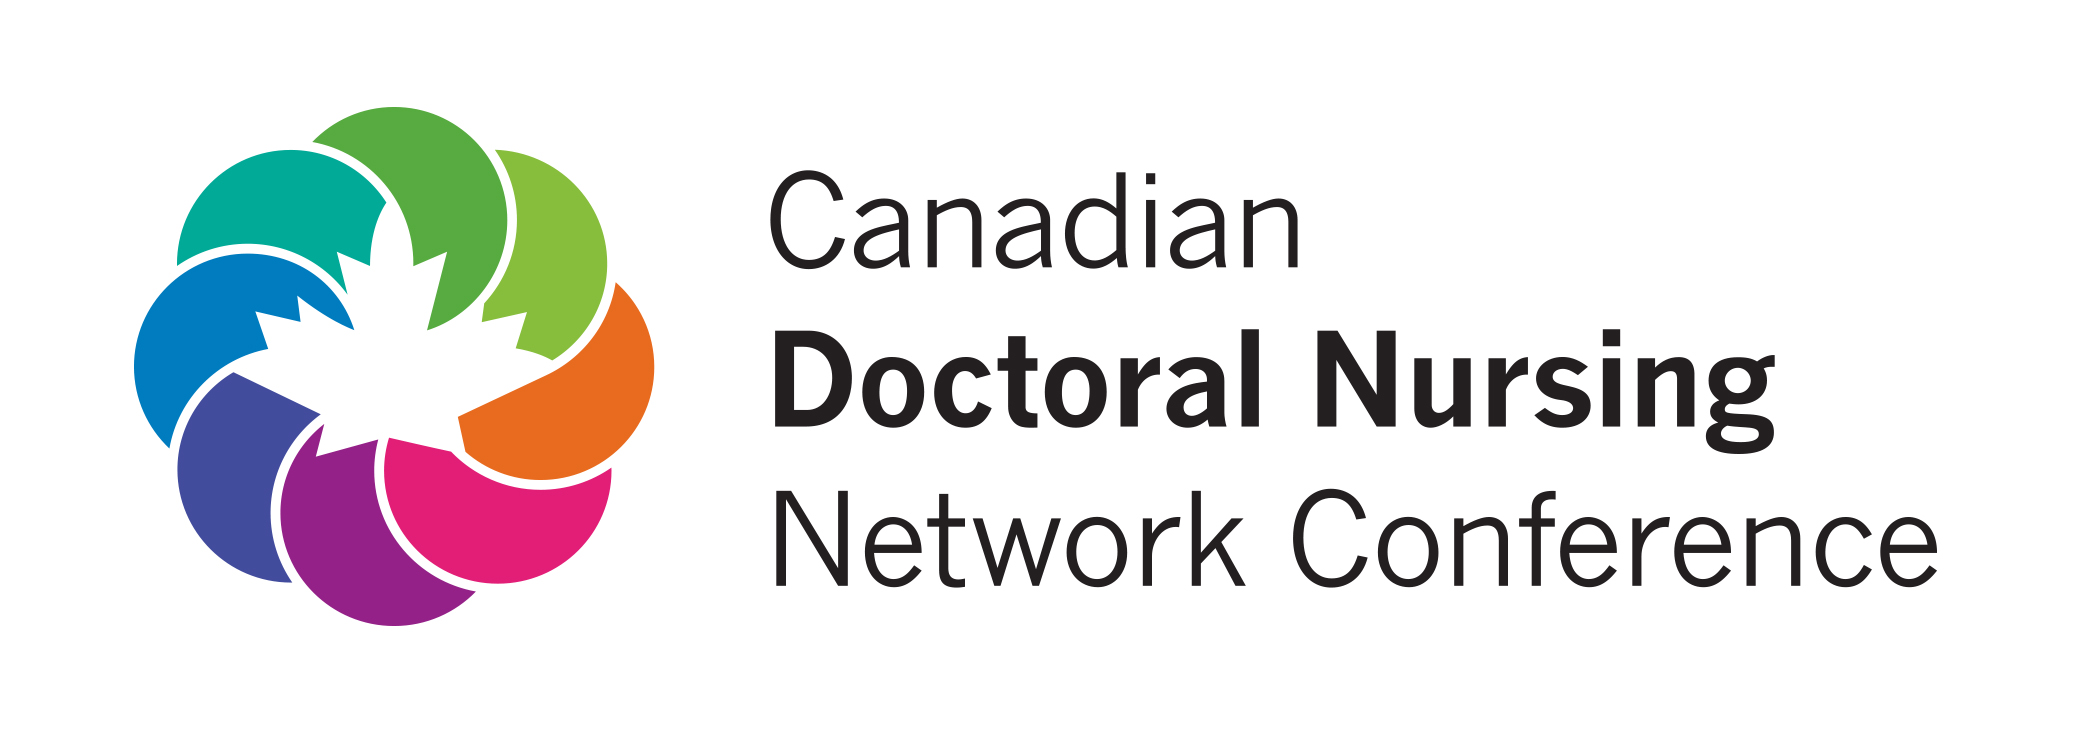 Canadian Doctoral Nursing Network Conference